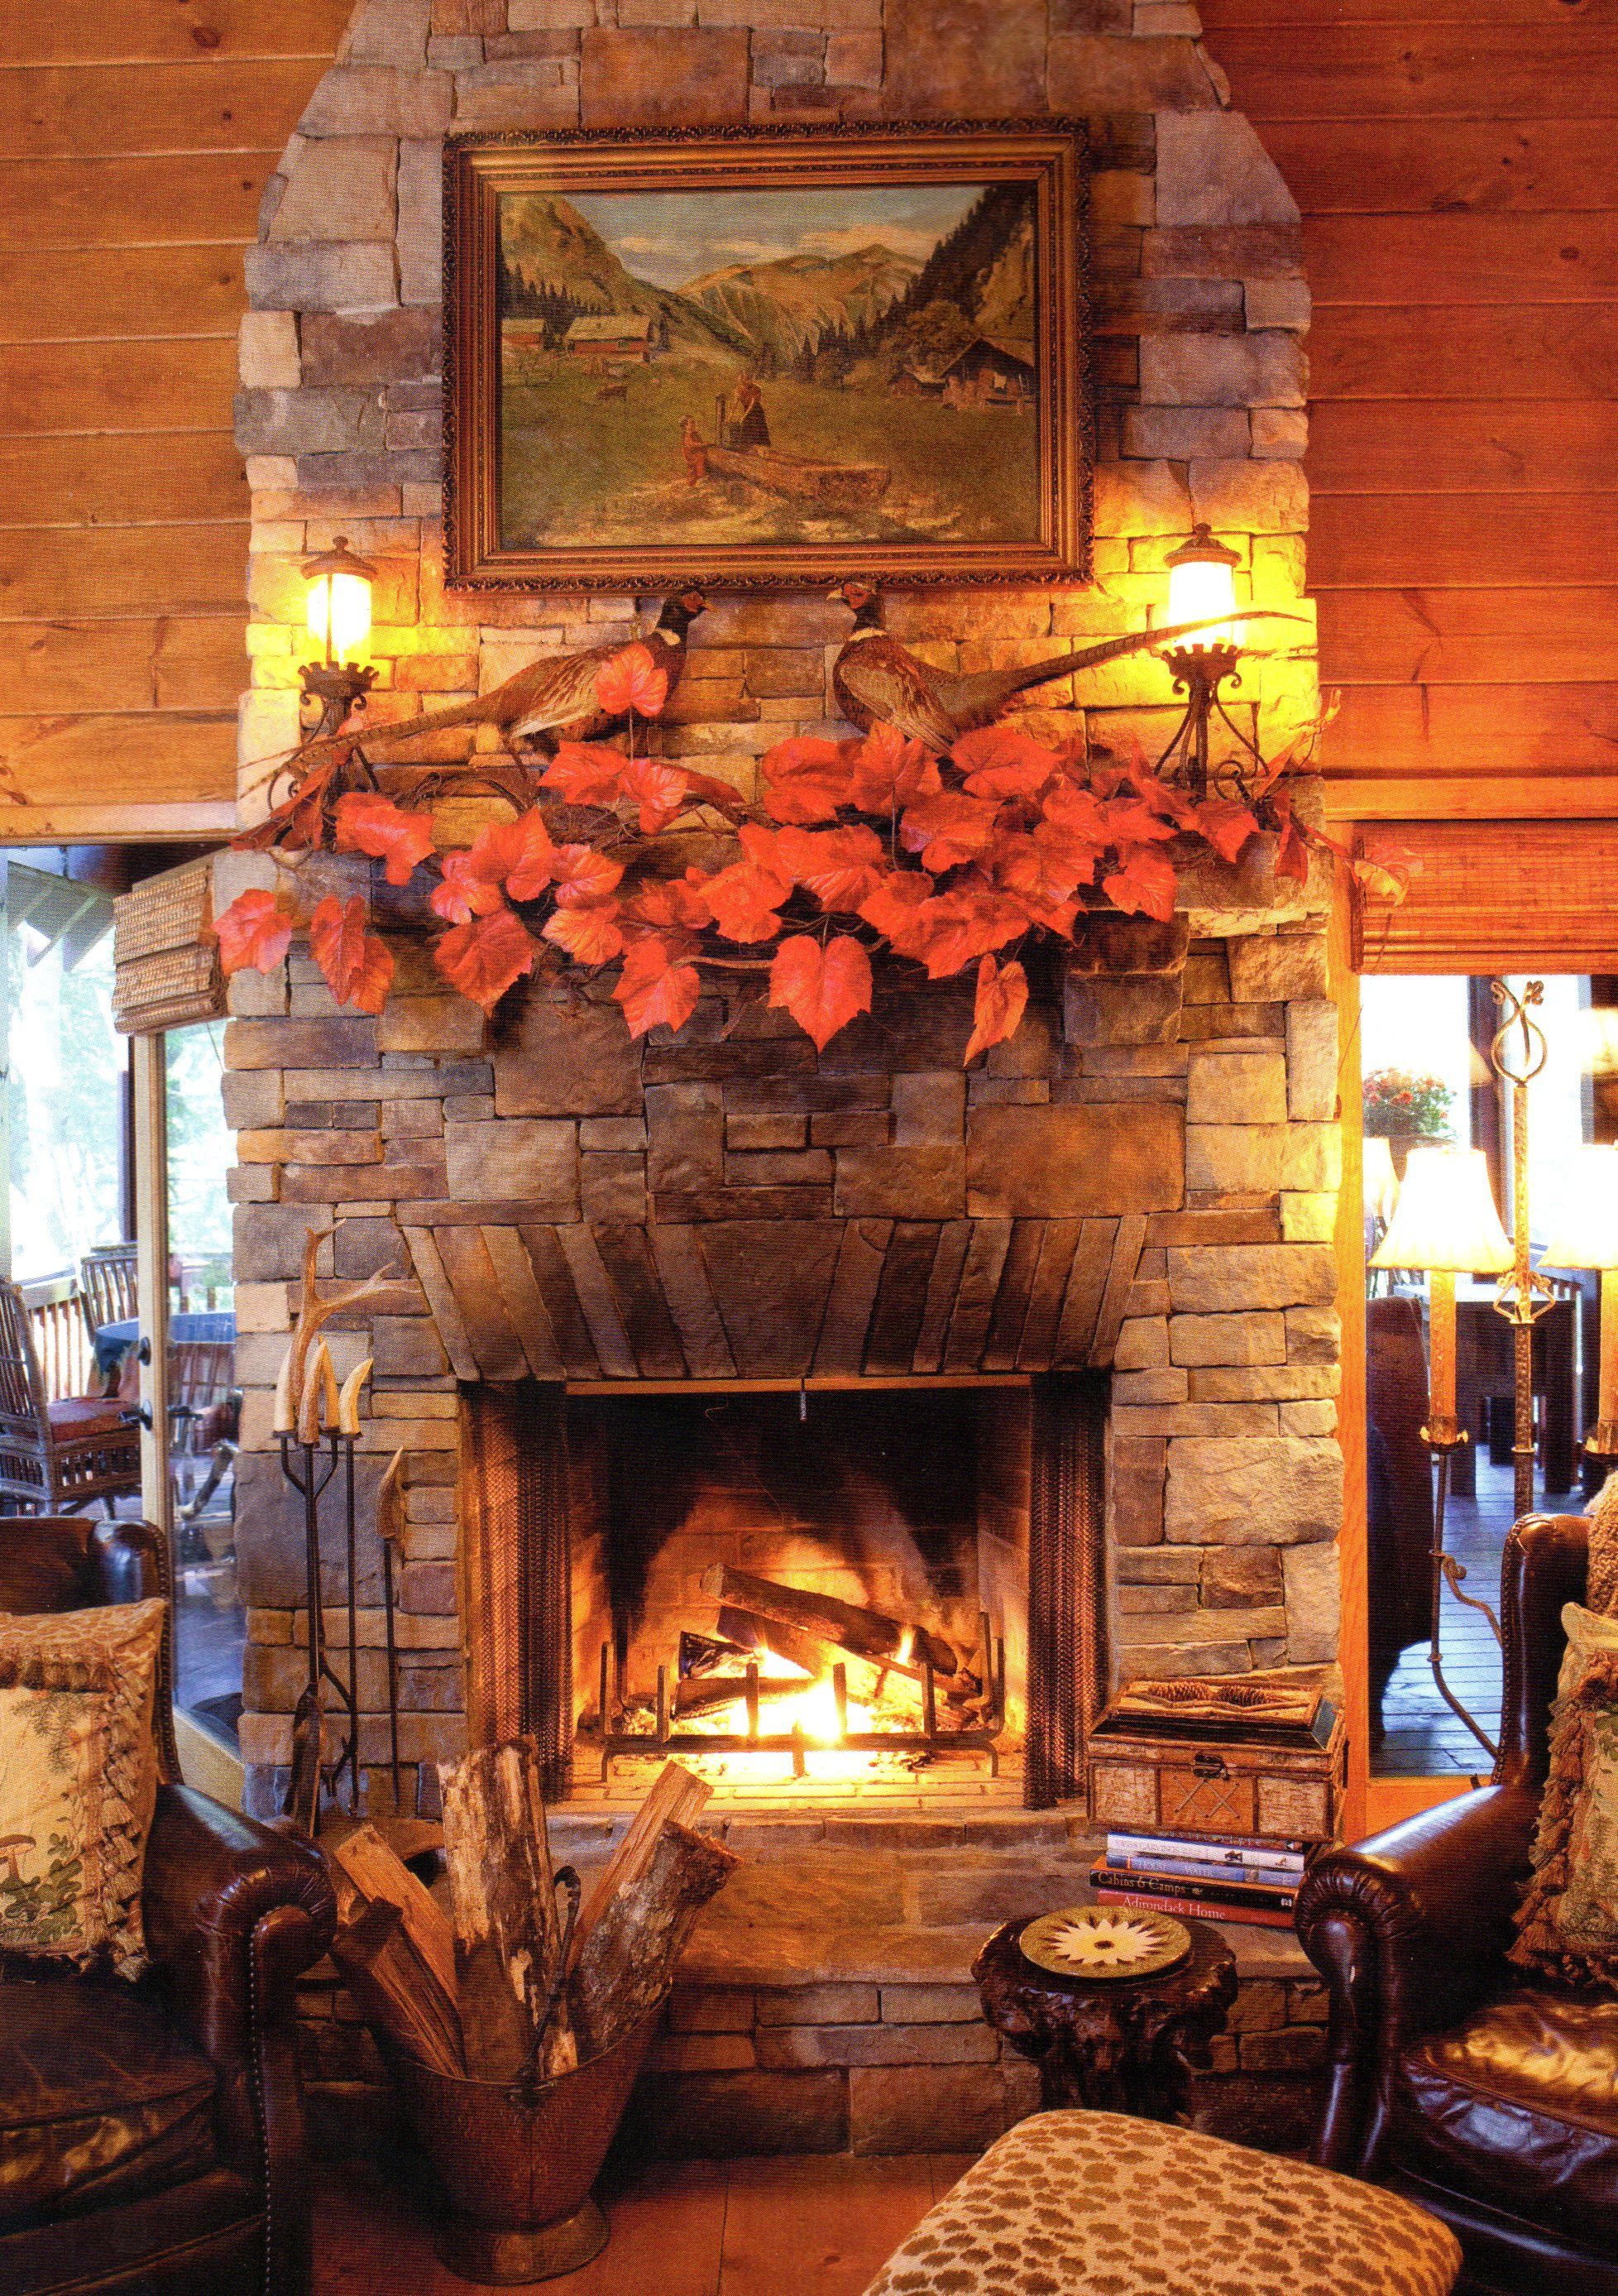 Cozy Fall Fireplace • Original Source Not Found 20 Thanksgiving Fall Fireplace Ideas 201db45. Fall Fireplace, Autumn Decorating, Fireplace